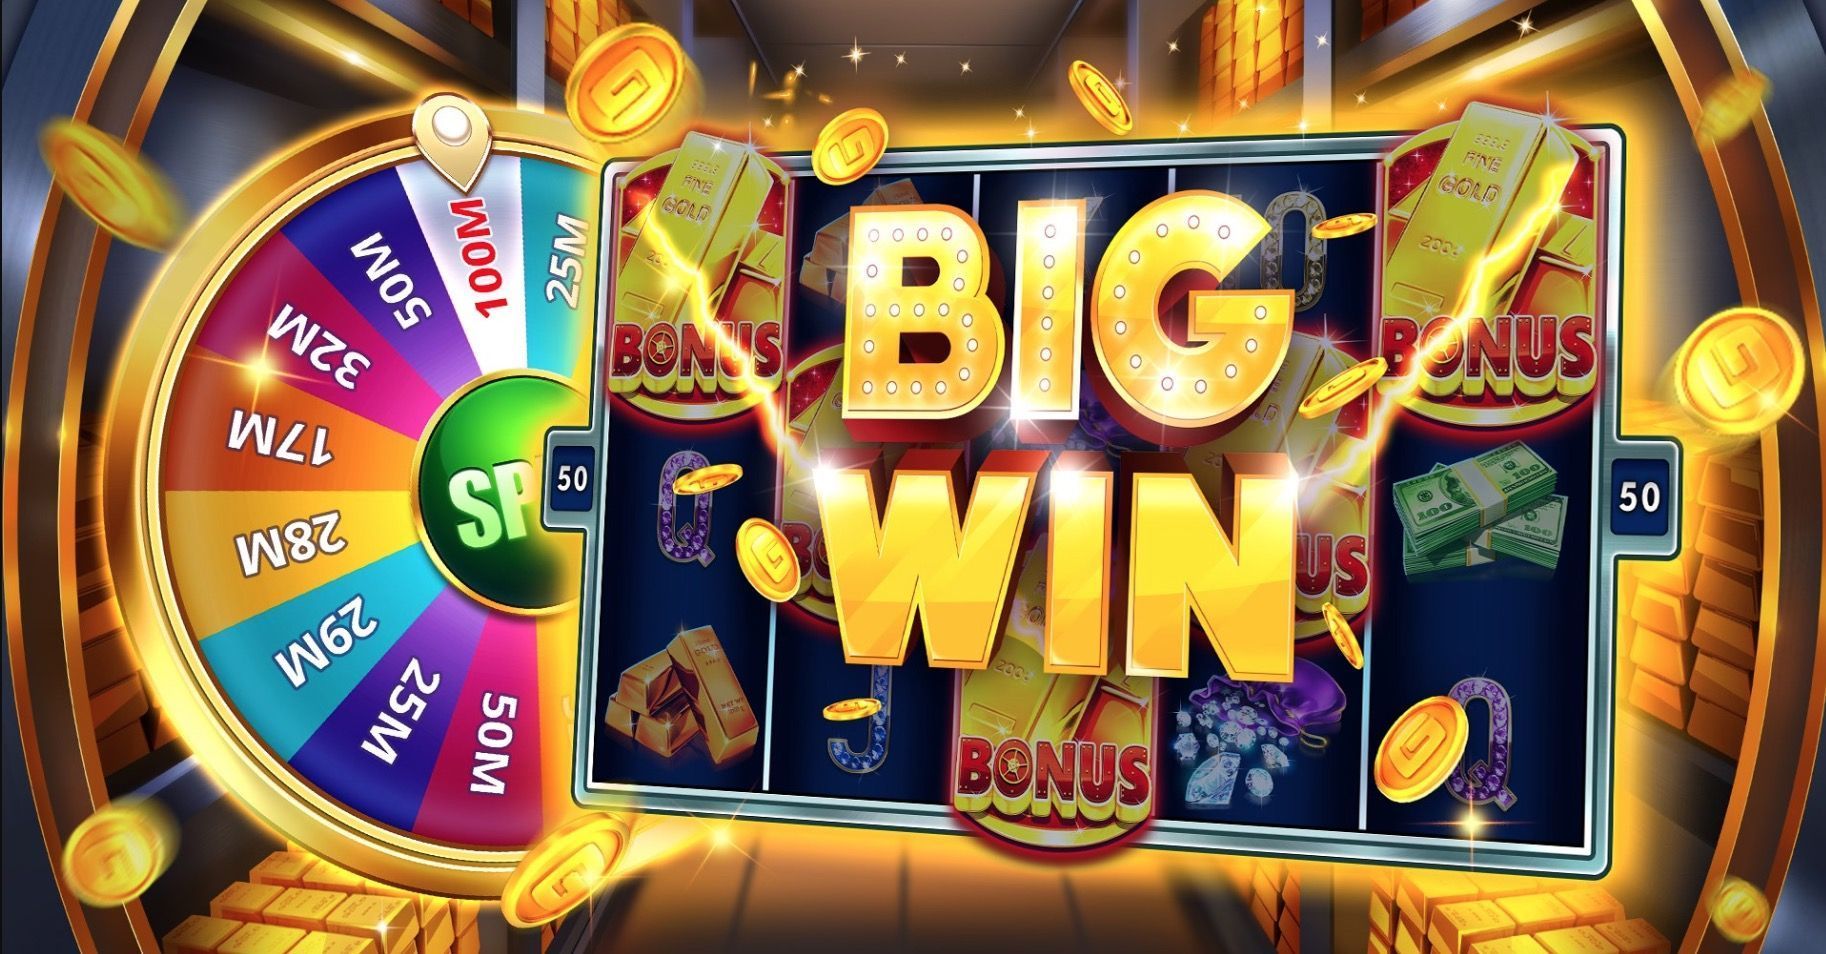 Top Uk Online Casino Slots Popular Games With Bonuses